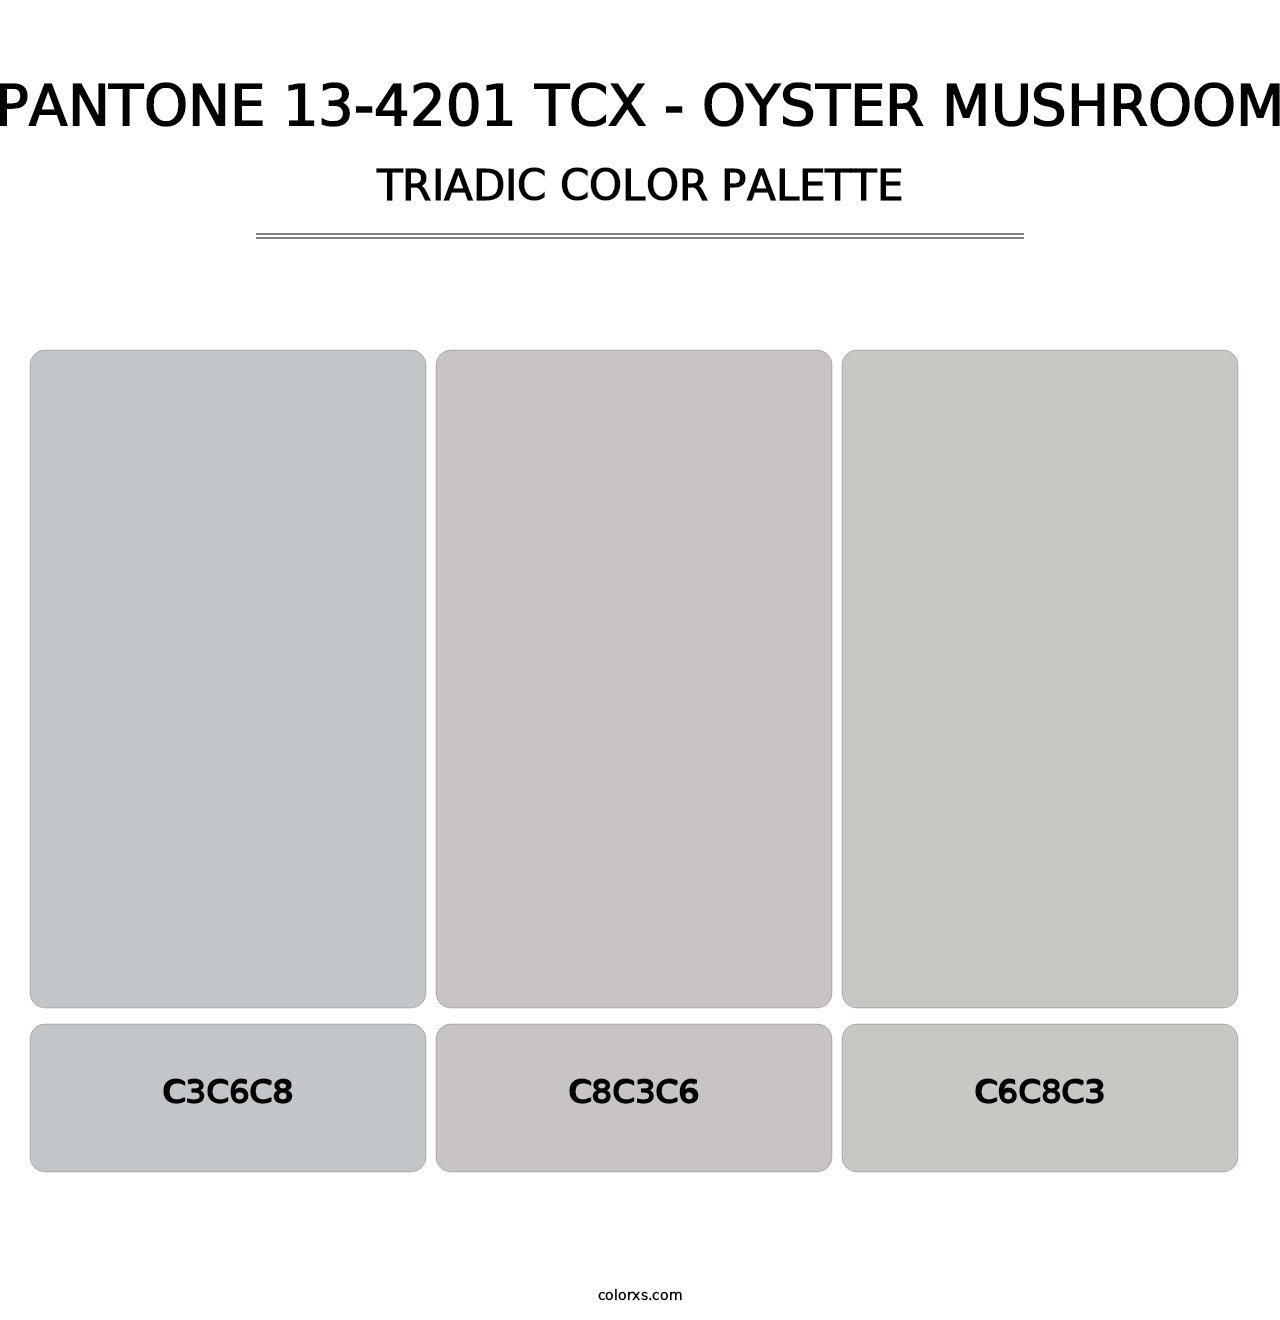 PANTONE 13-4201 TCX - Oyster Mushroom - Triadic Color Palette